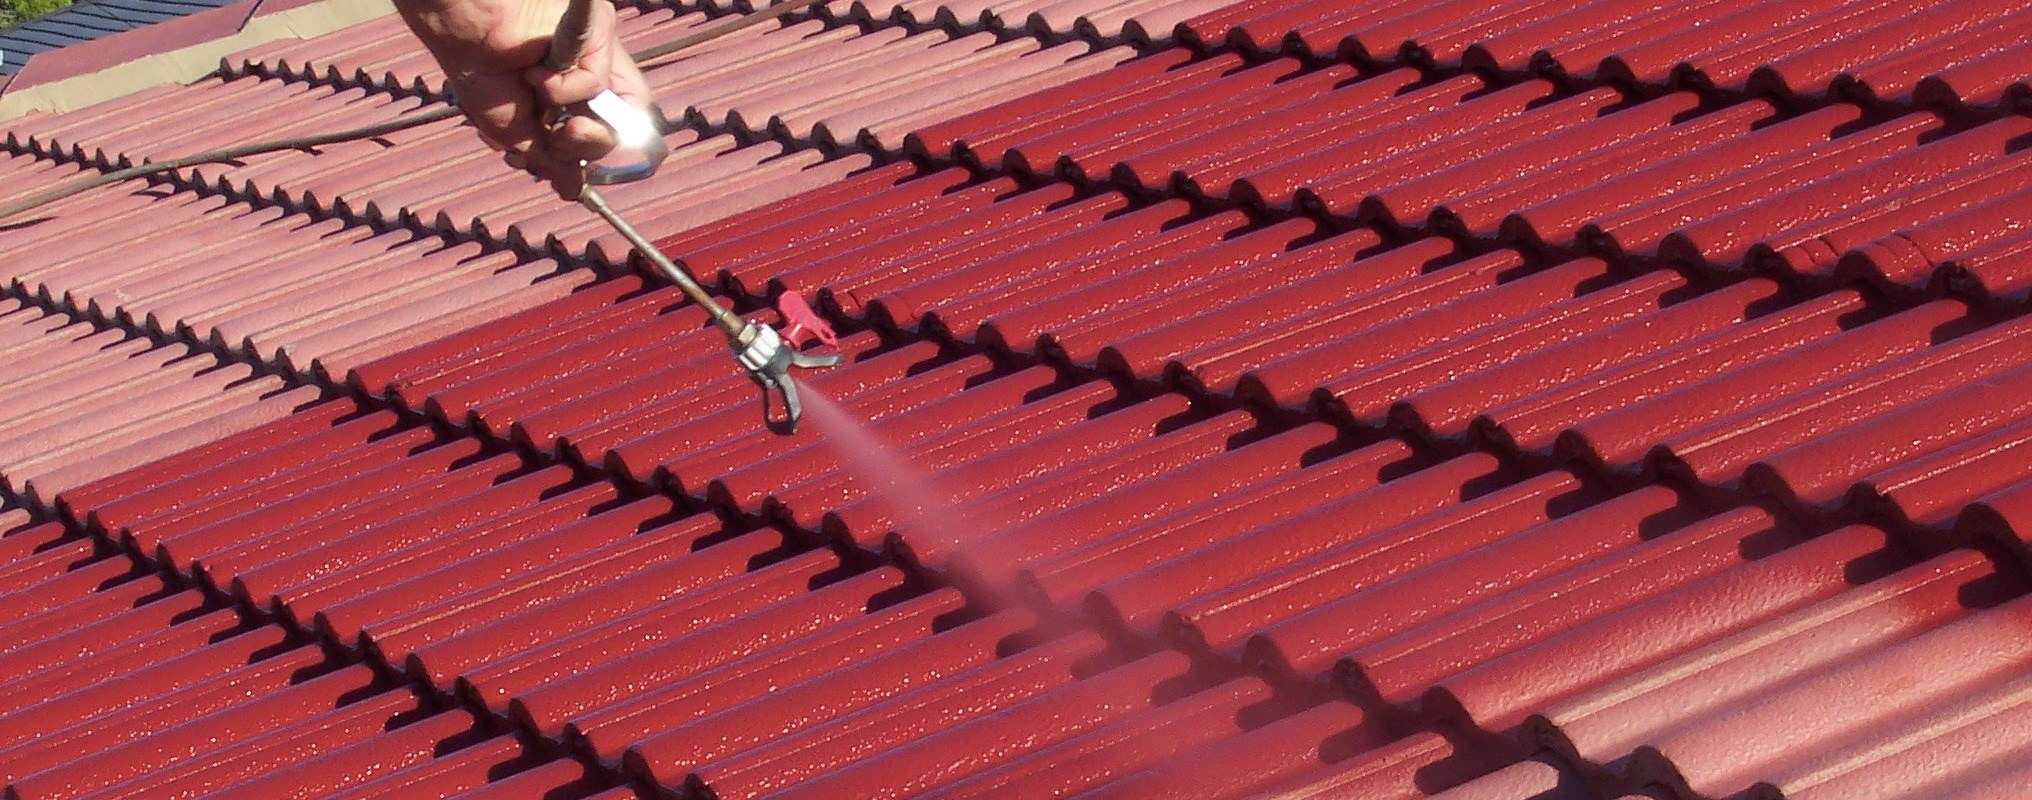 Roof Restoration for Tiled Roofs